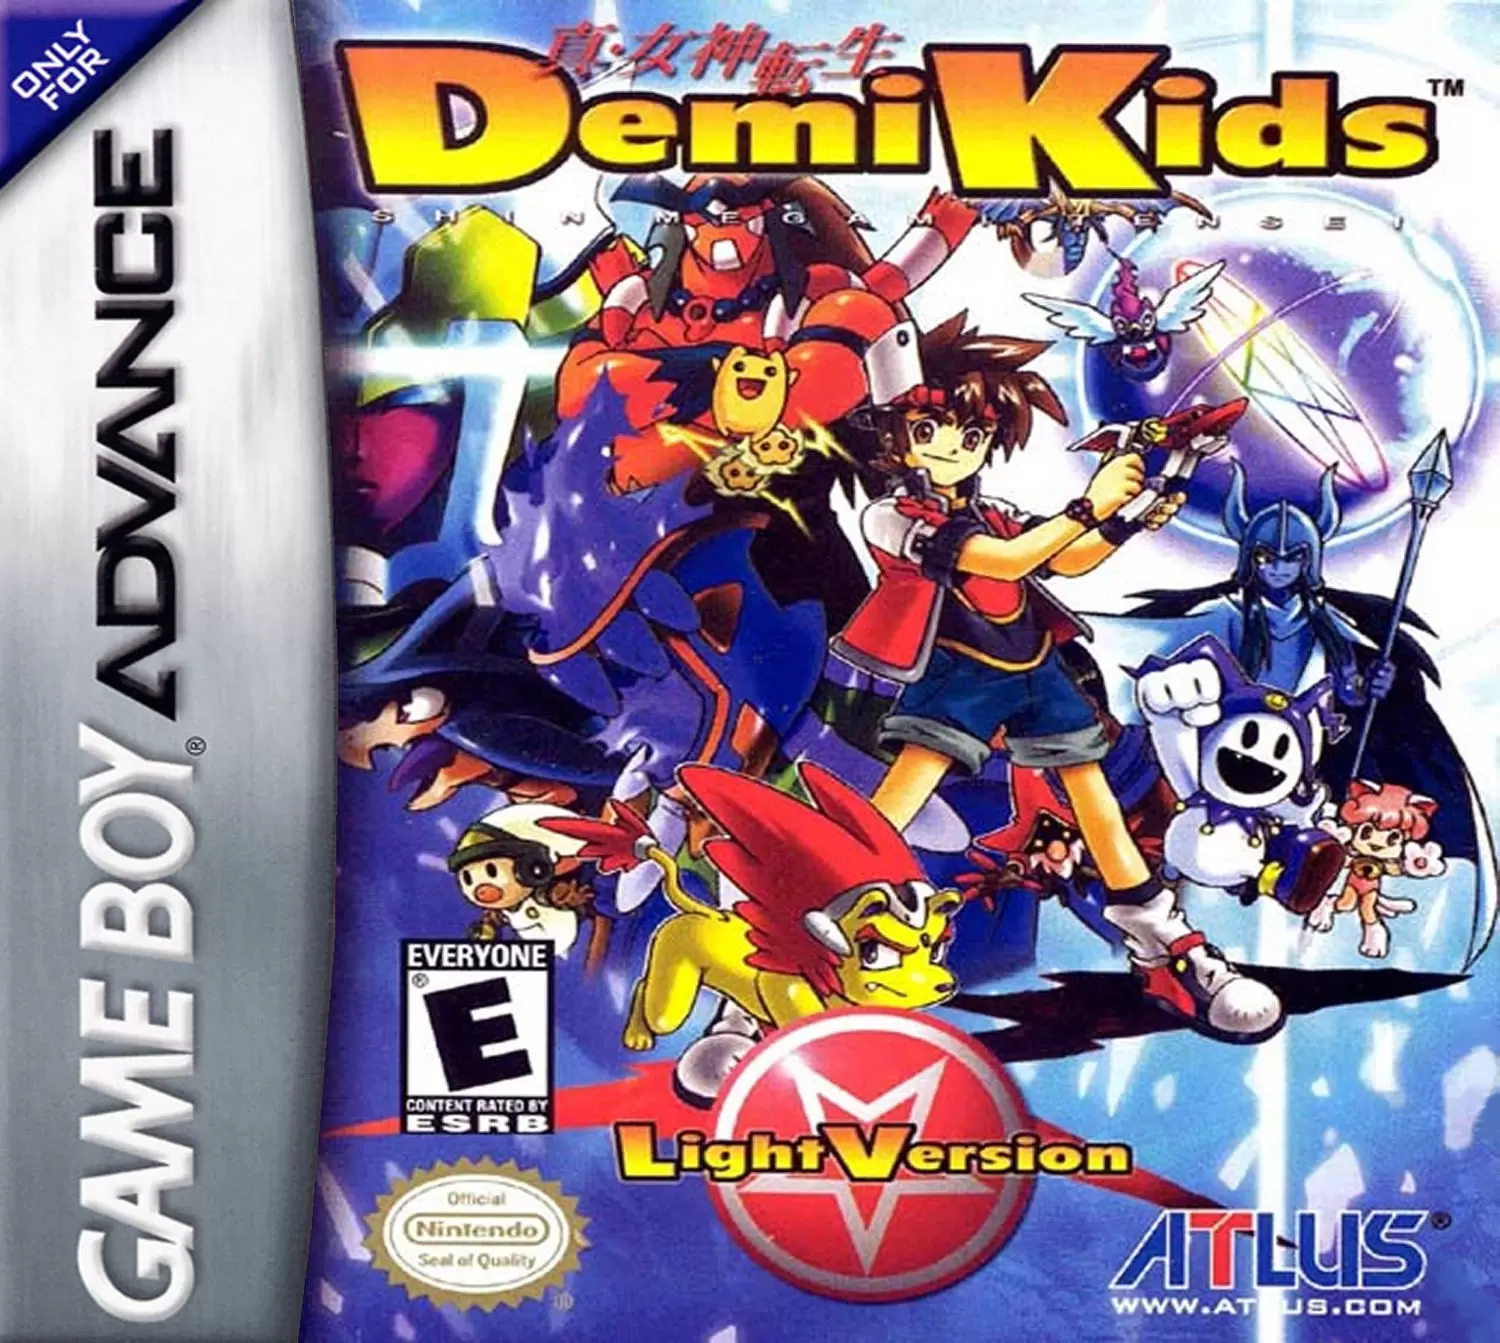 Game Boy Advance Games - DemiKids: Light Version